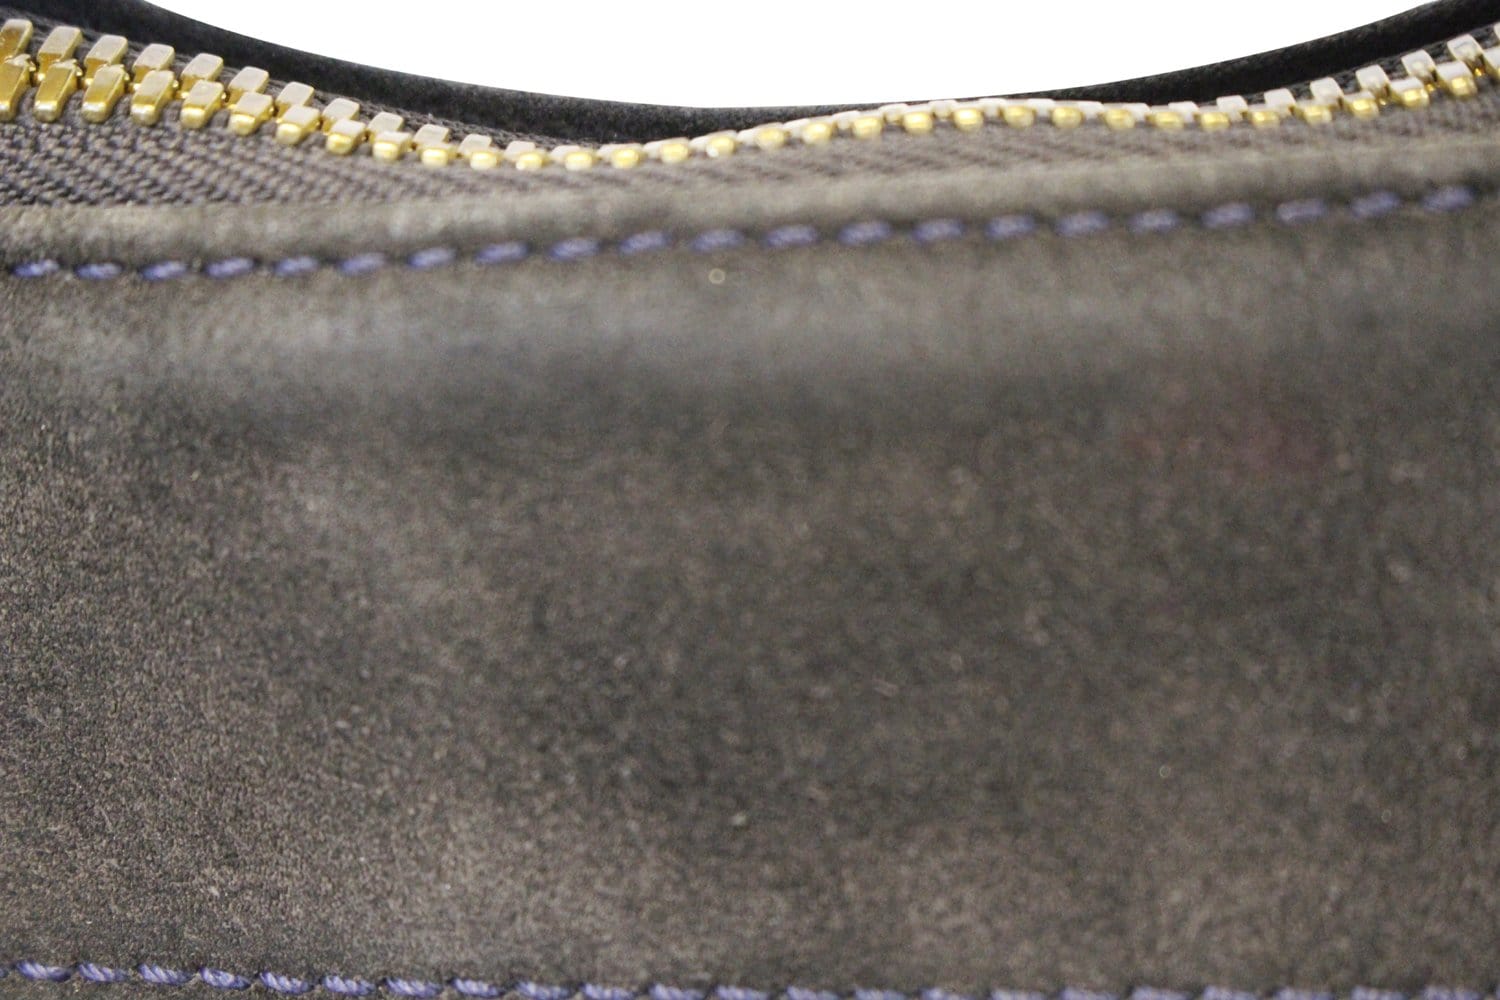 Audacieuse Empreinte Leather Shoulder Bag (Authentic Pre-Owned)